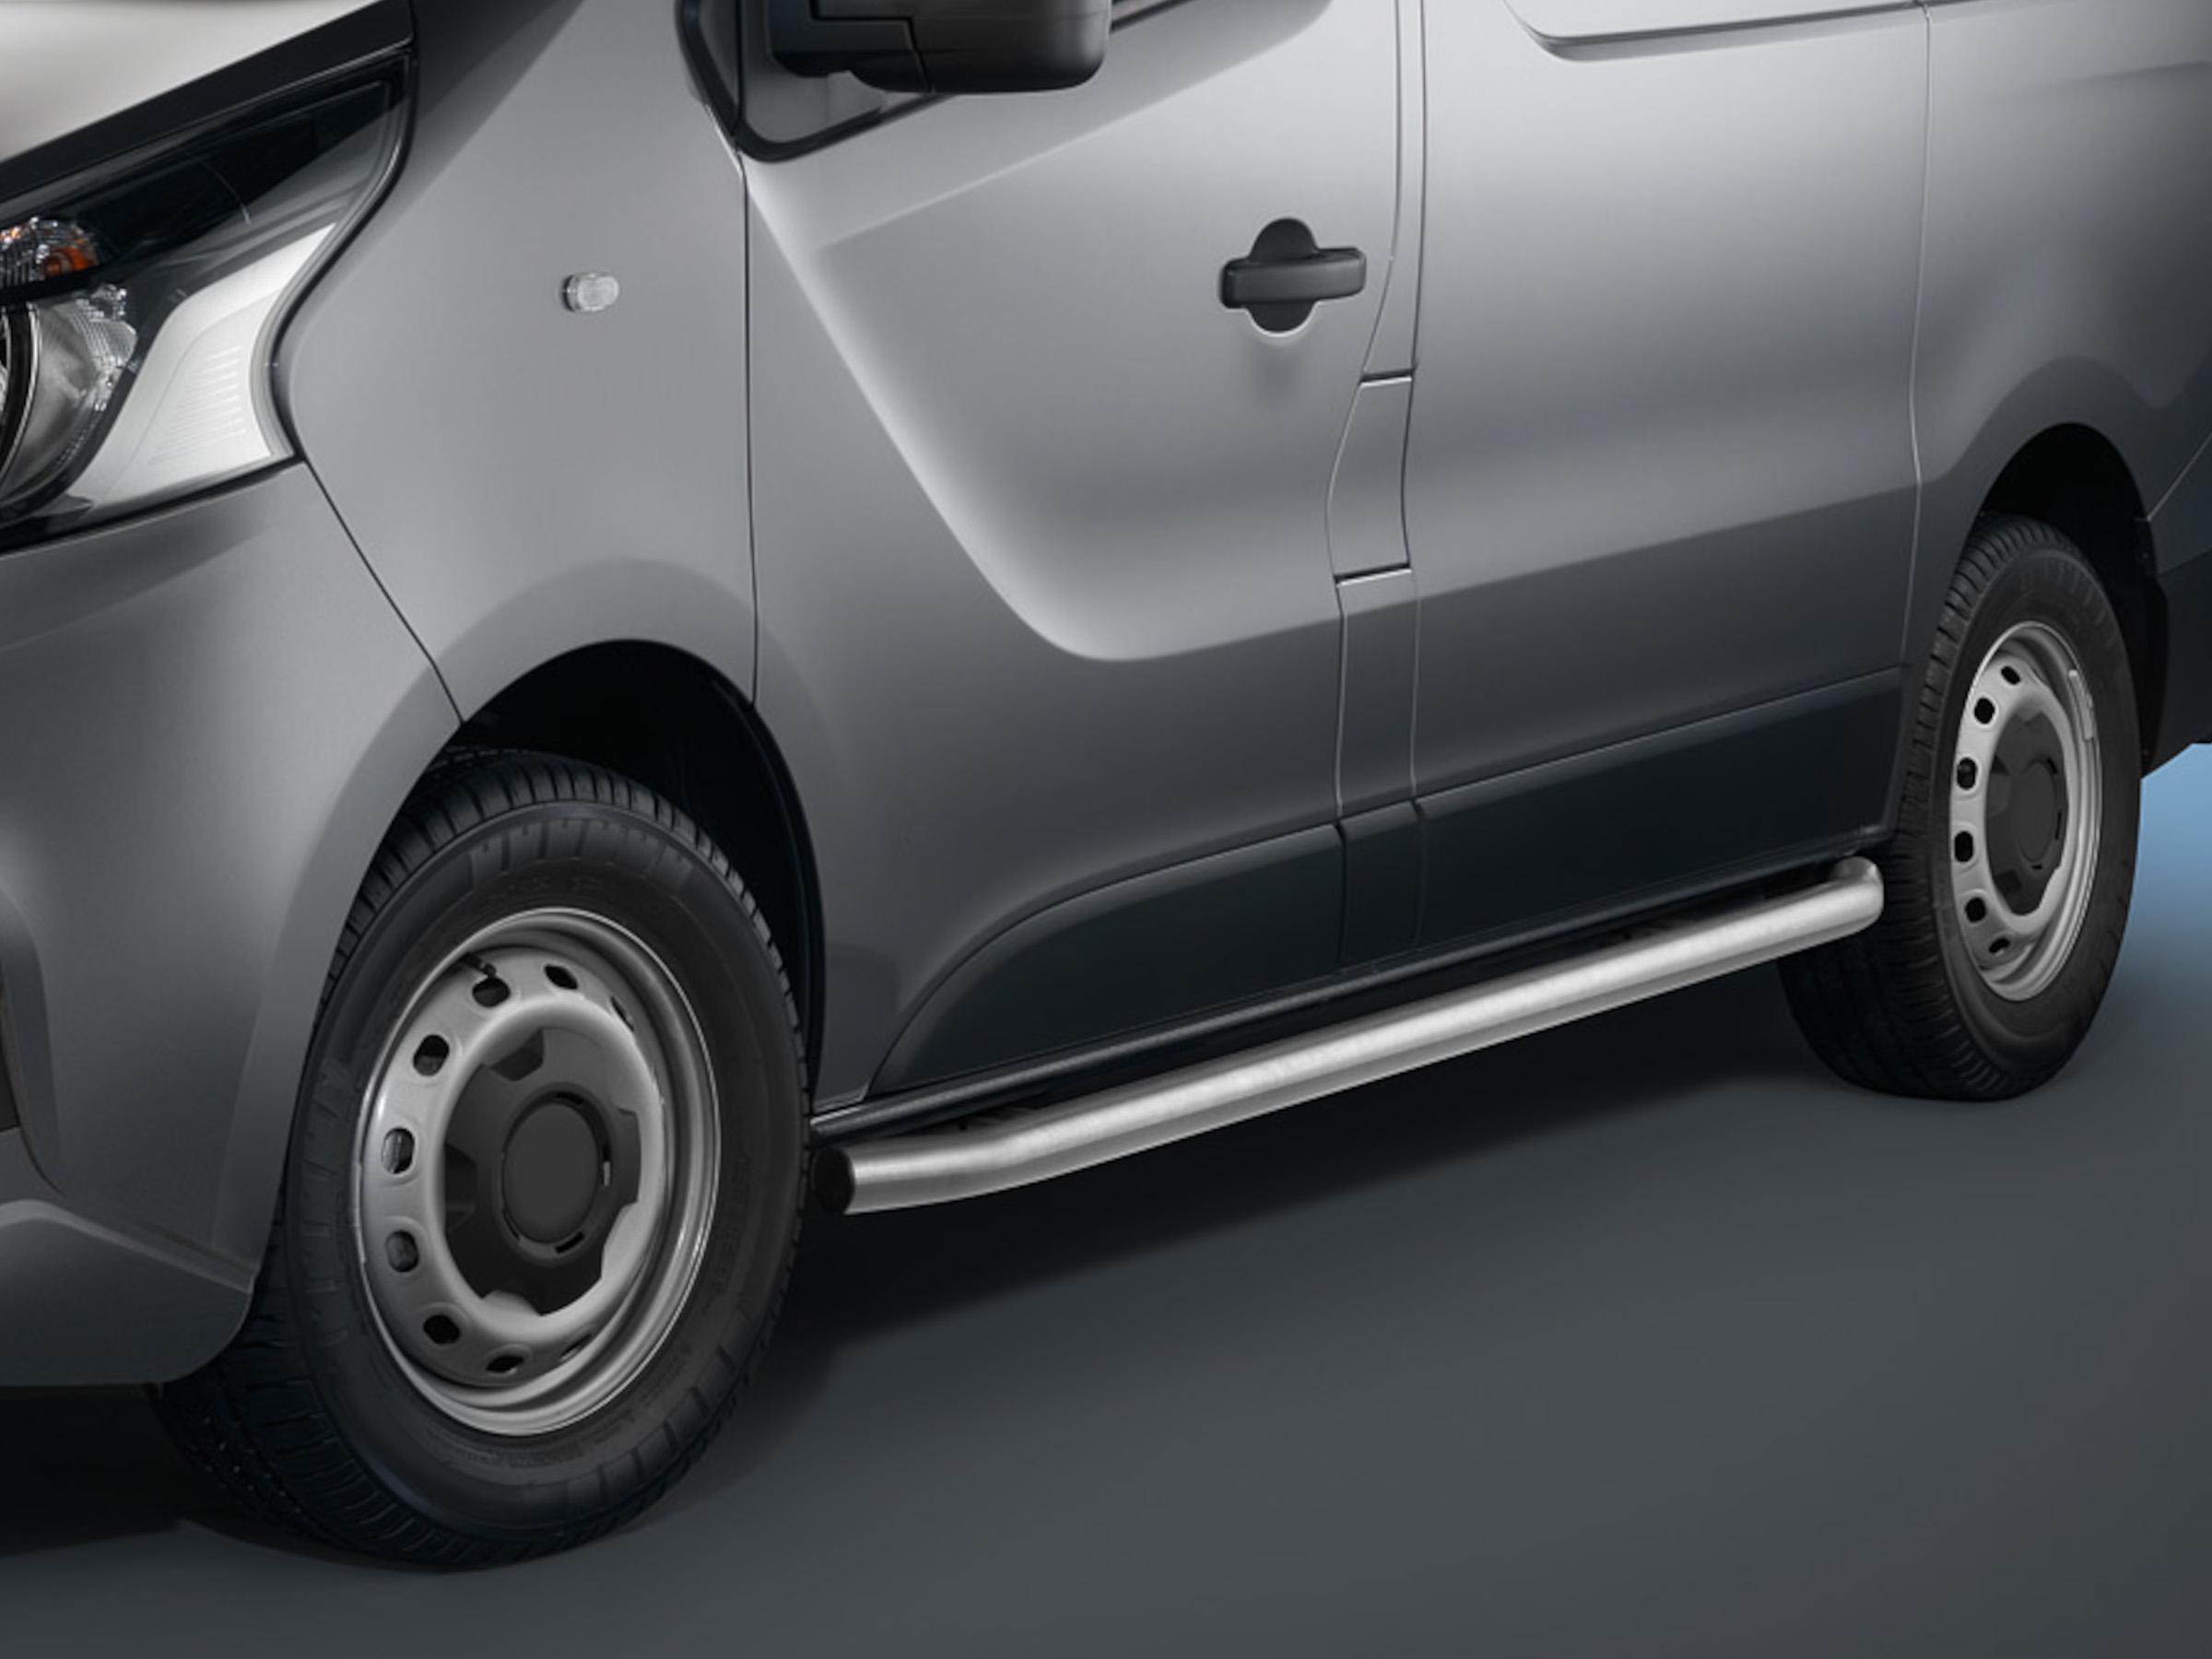 Opel | CITYGUARD® Talento - wheelbase: COBRA Nissan steps short & & Vivaro side Webshop NV300 Jumbo-Fischer & Trafic Renault Fiat | Primastar without &